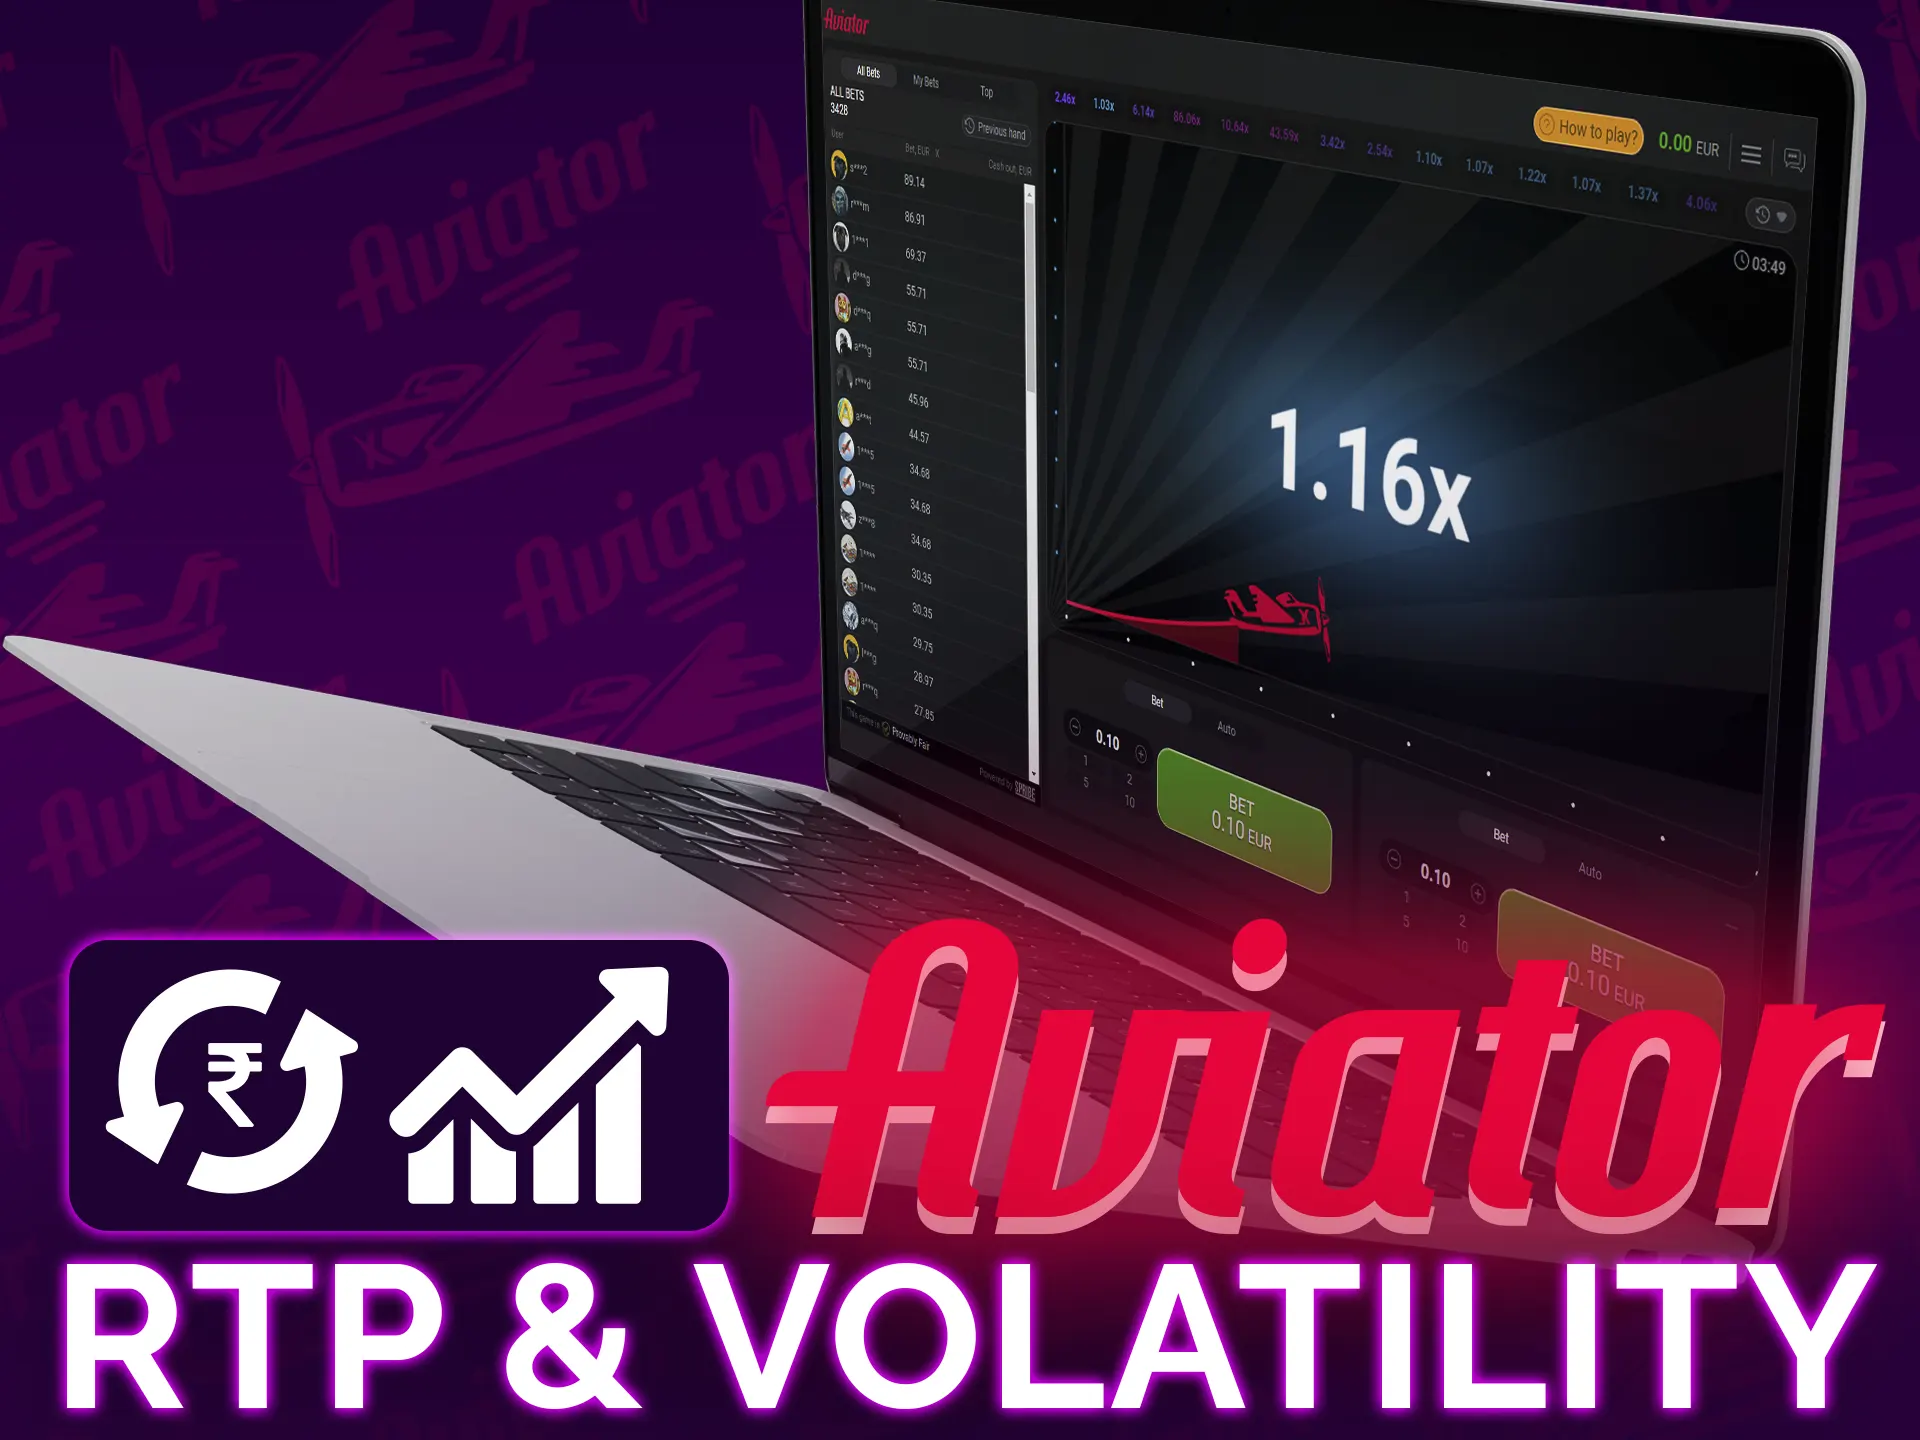 Aviator offers high RTP and balanced volatility.